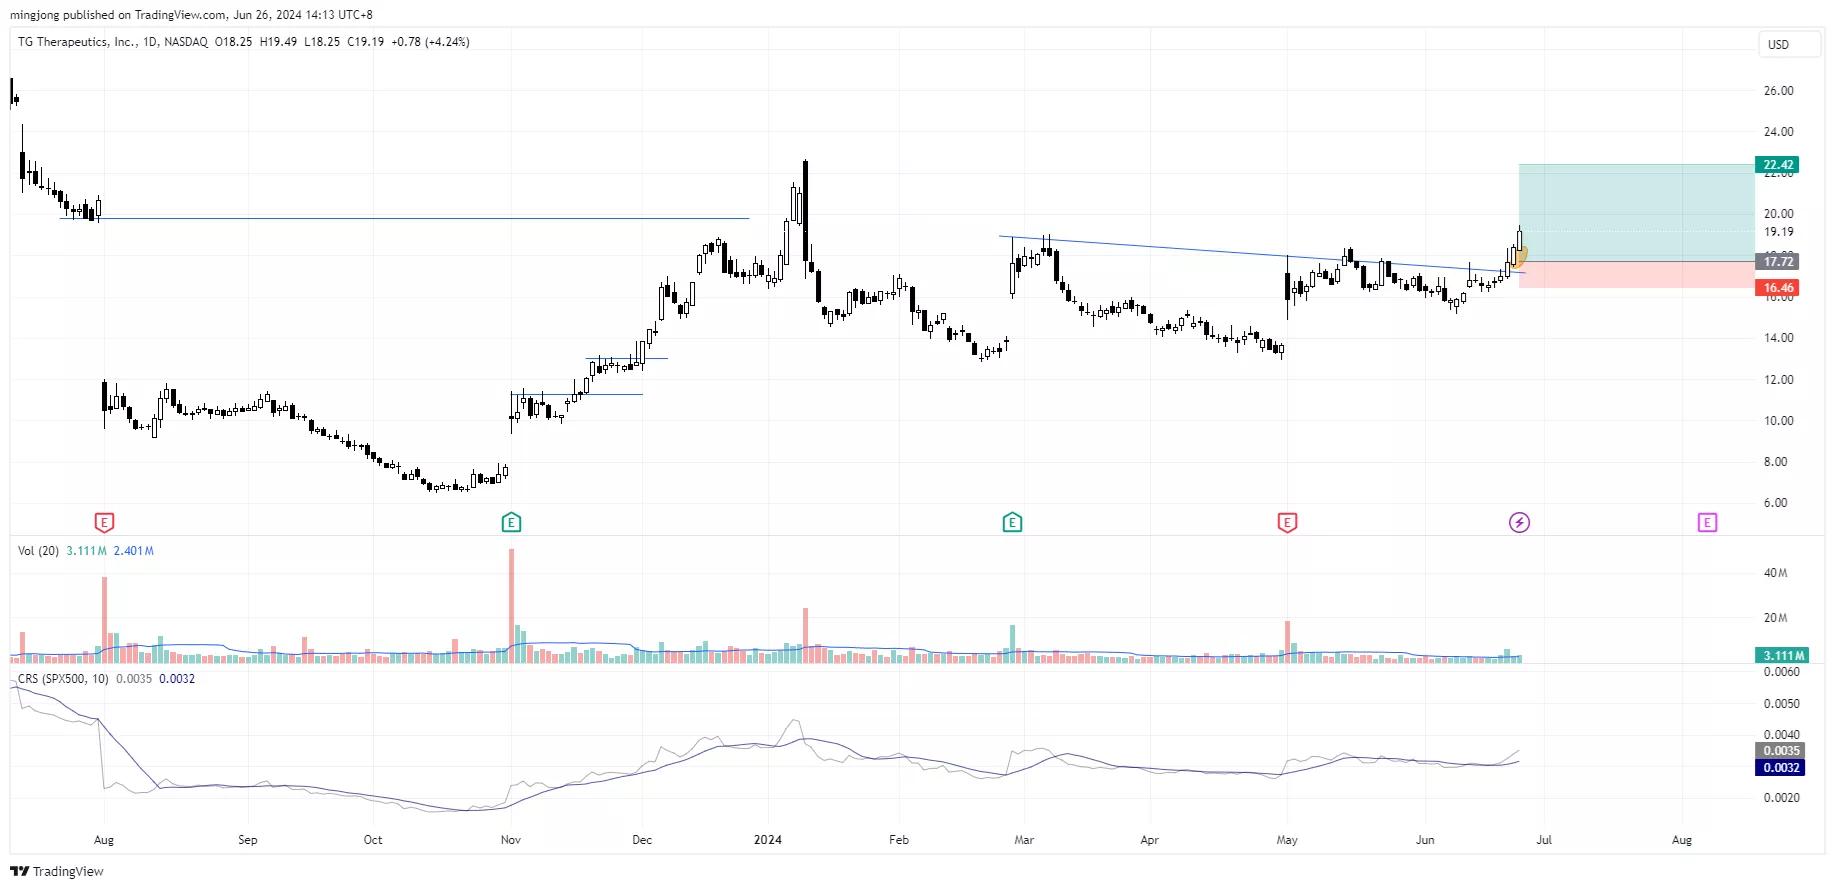 TGTX stock buy signal